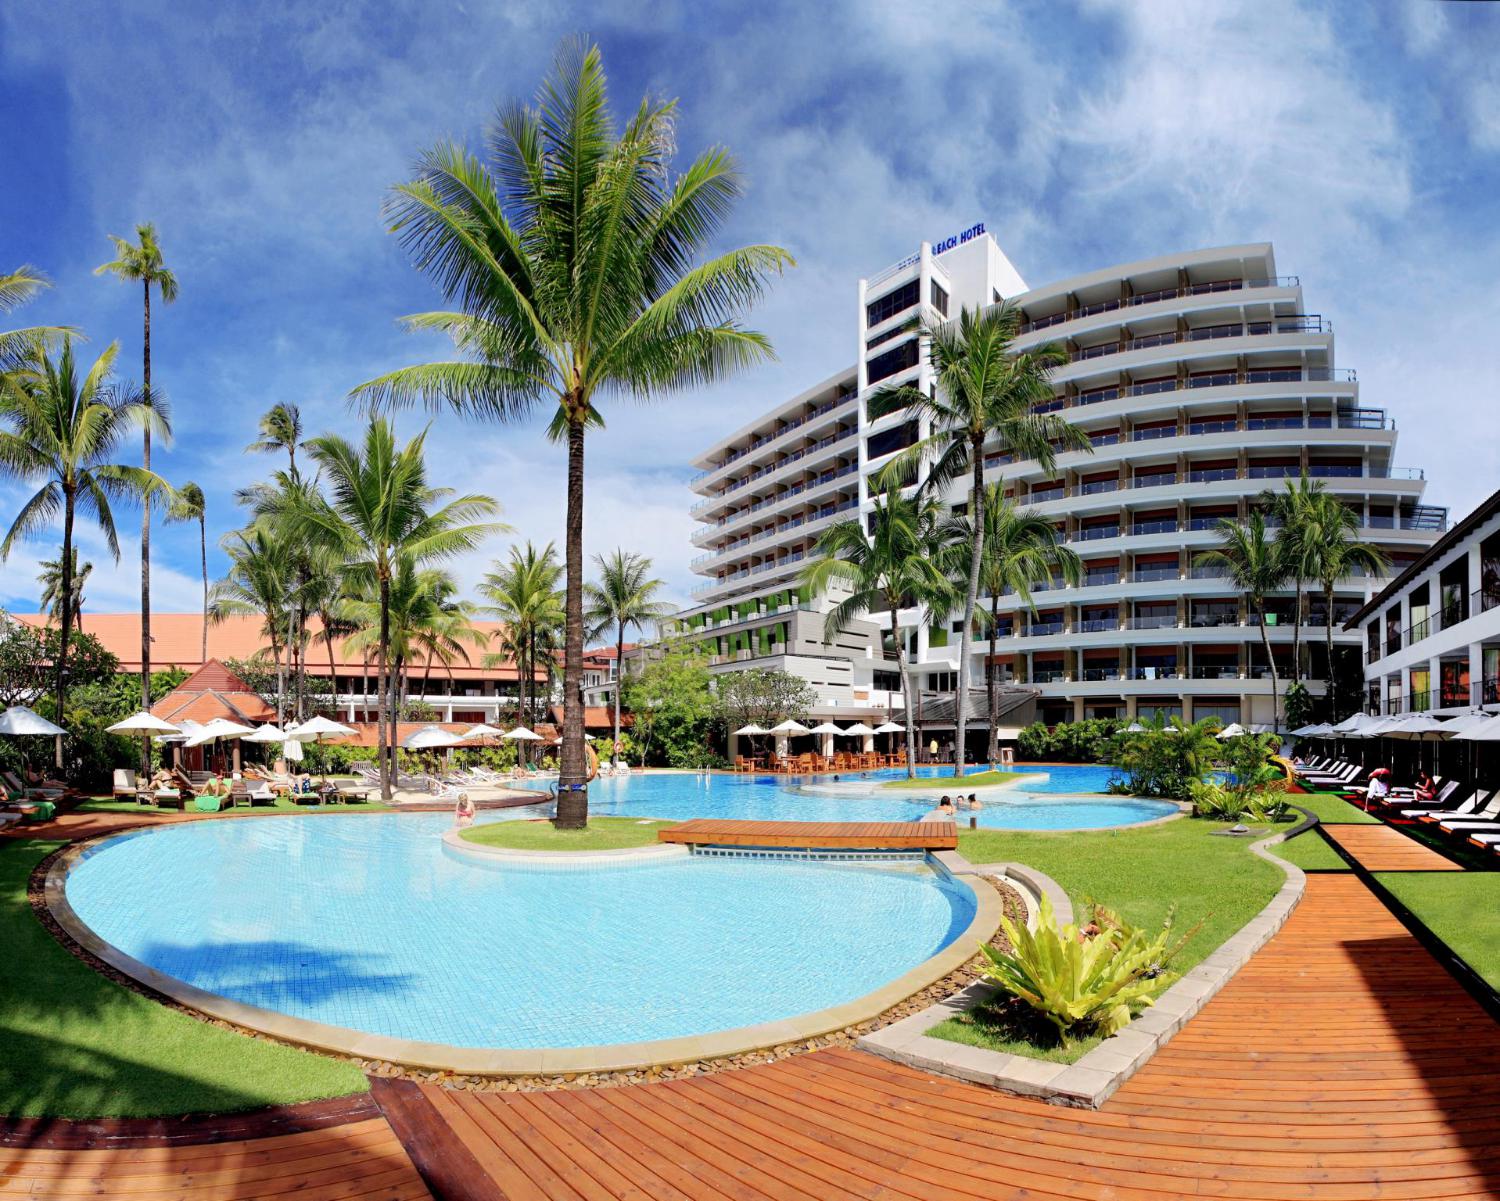 Patong Beach Hotel - Image 0